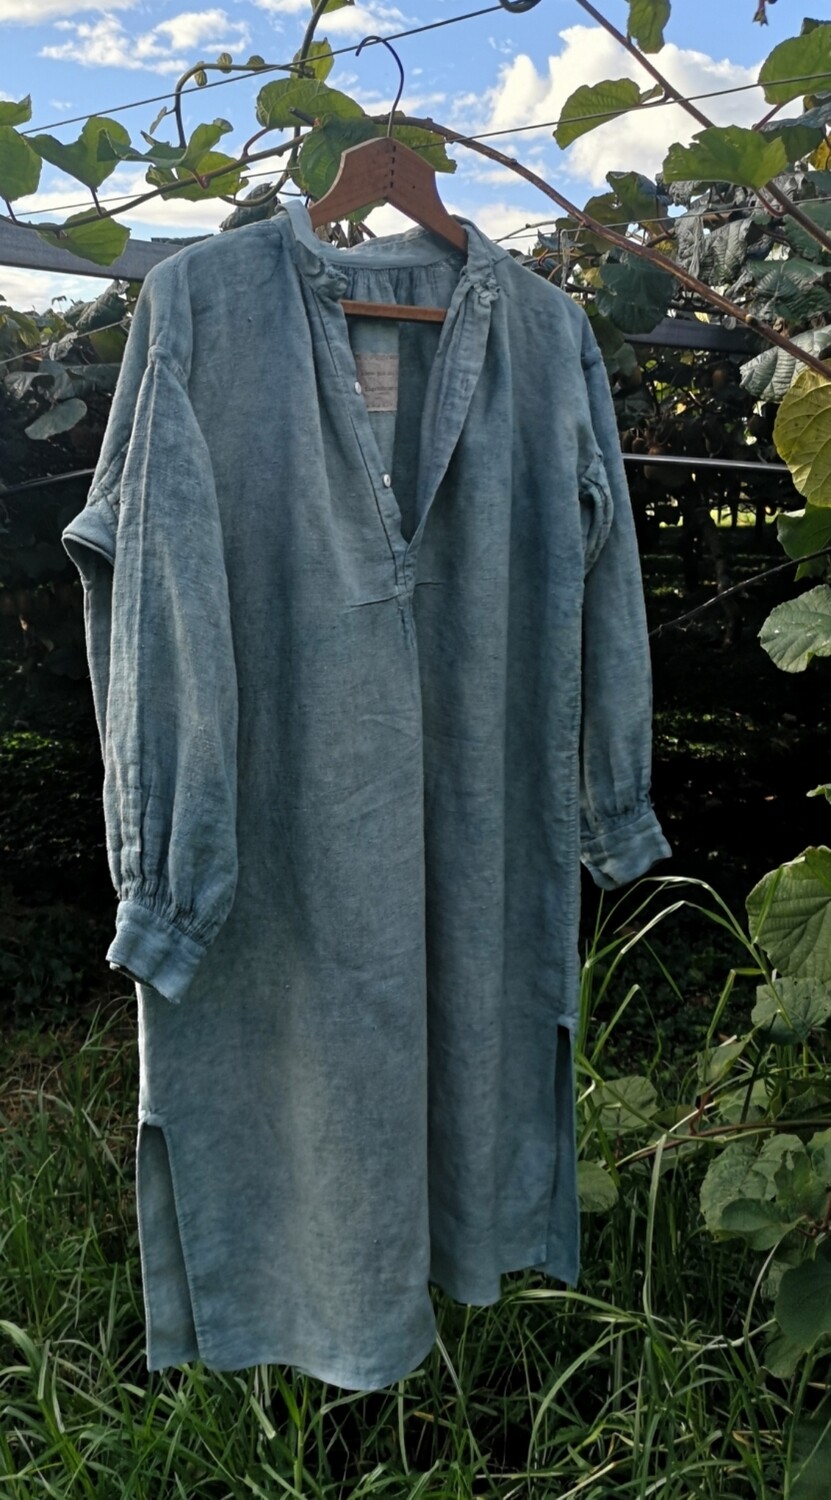 Indigo dyed linen dress